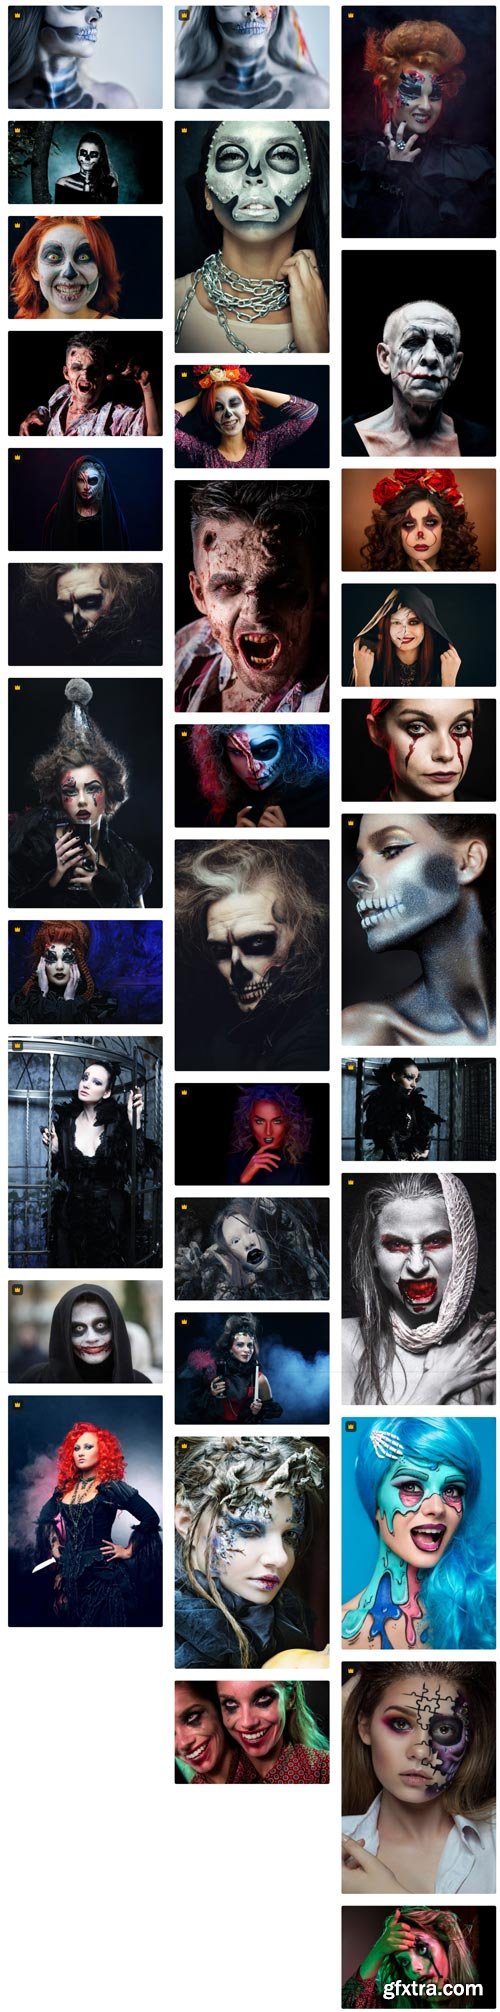 Premium Photo Collections - Halloween Makeup - 133xJPG